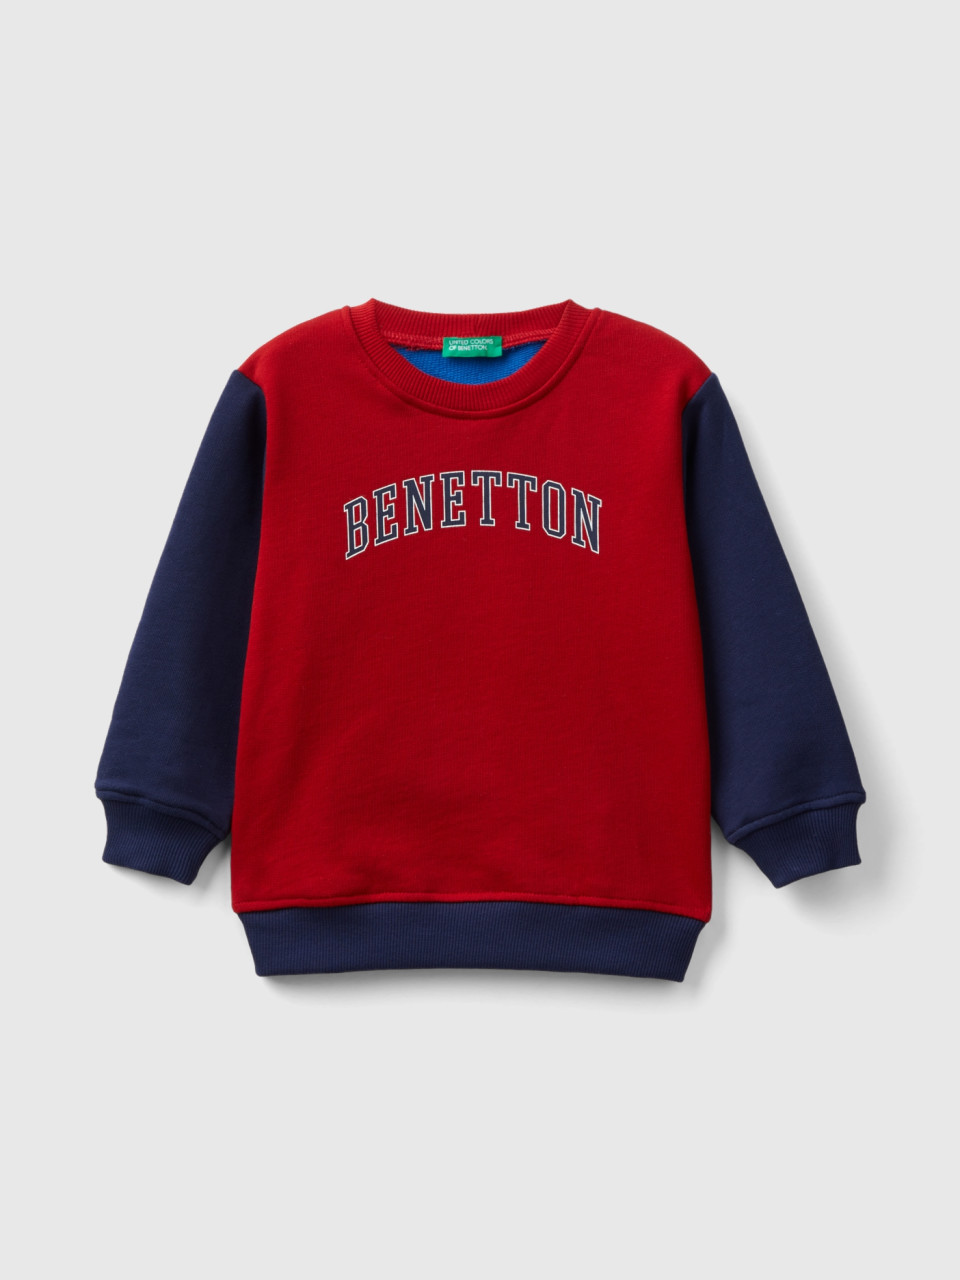 Benetton, Sweatshirt In 100% Organic Cotton, Multi-color, Kids